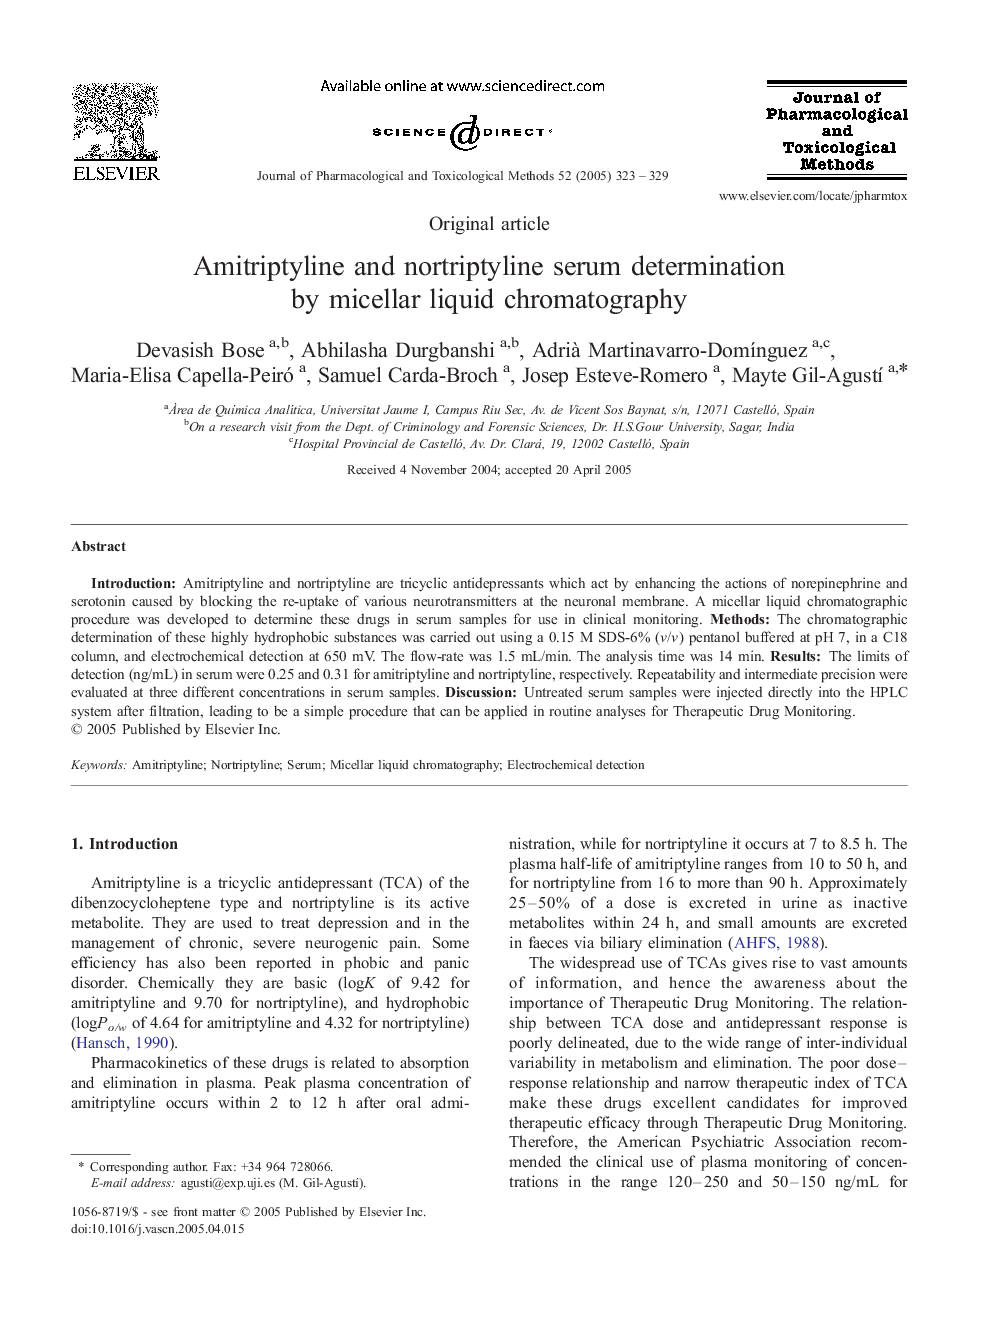 Amitriptyline and nortriptyline serum determination by micellar liquid chromatography